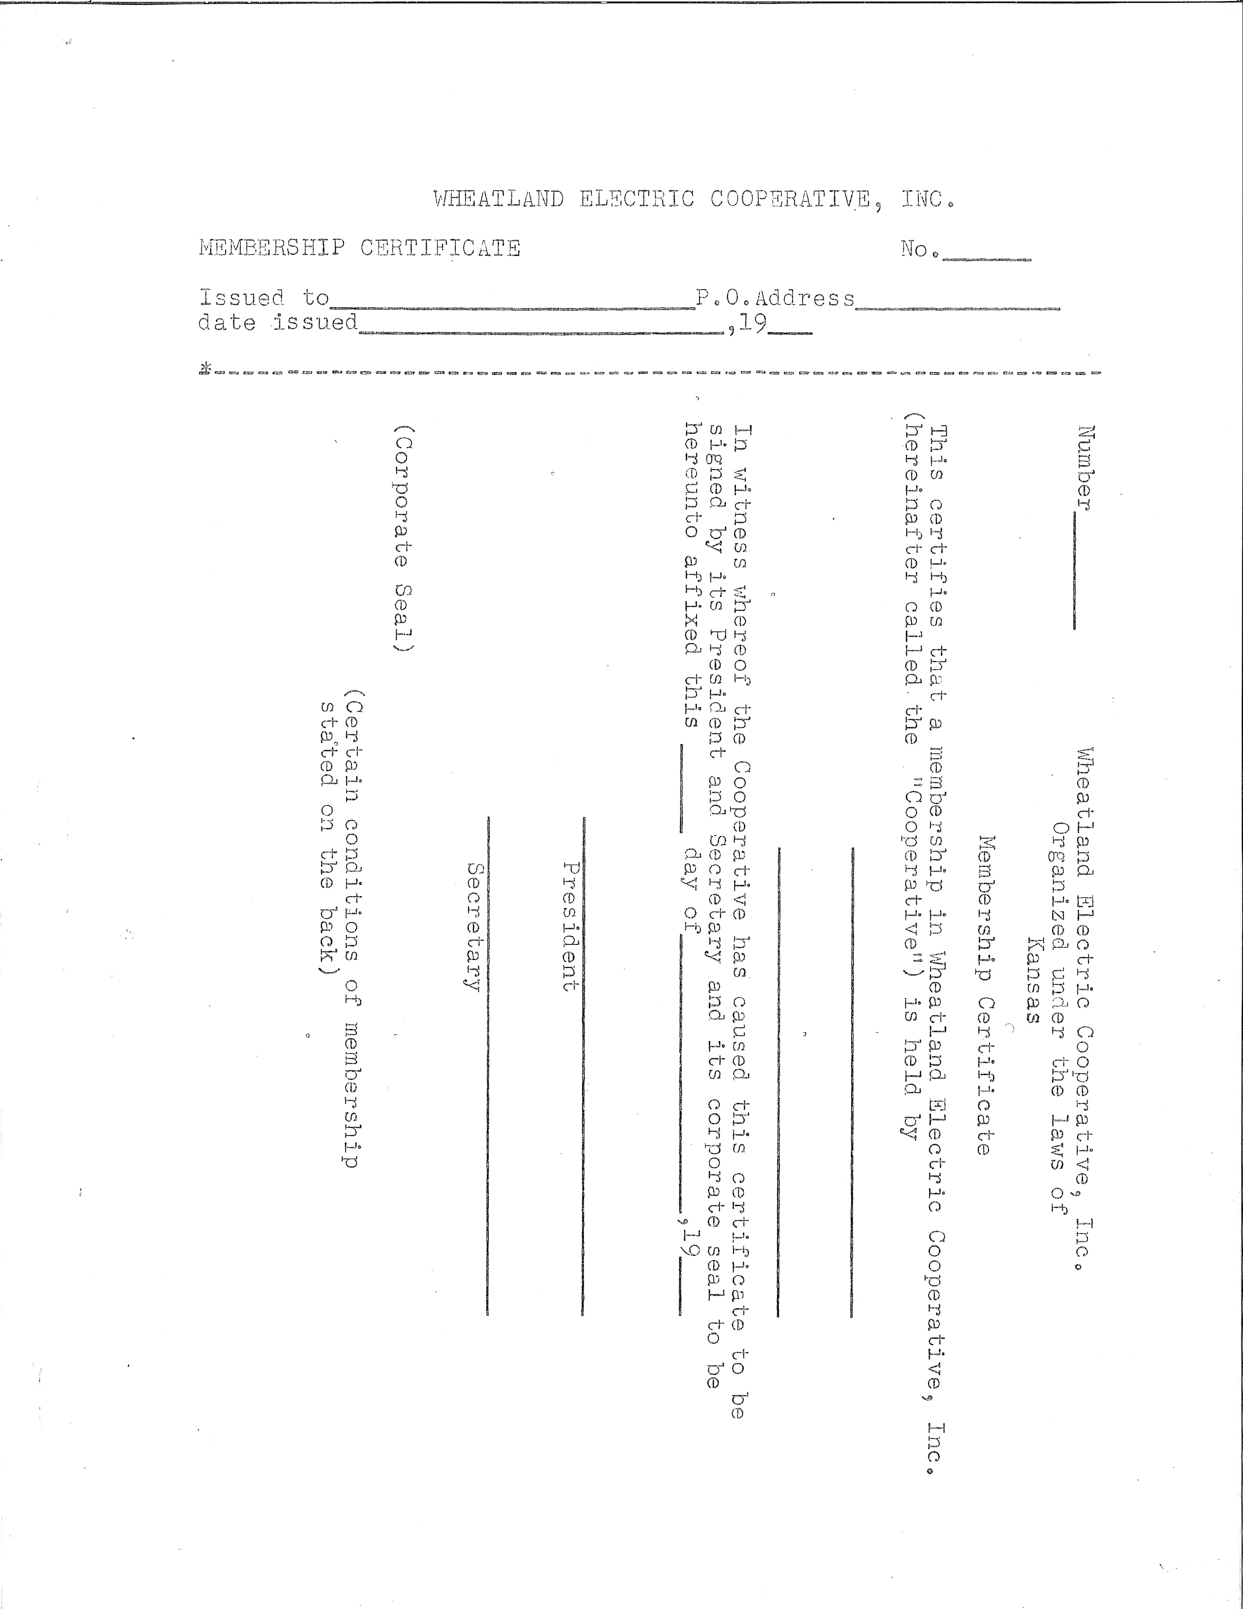 Original Membership Certificate Page 1